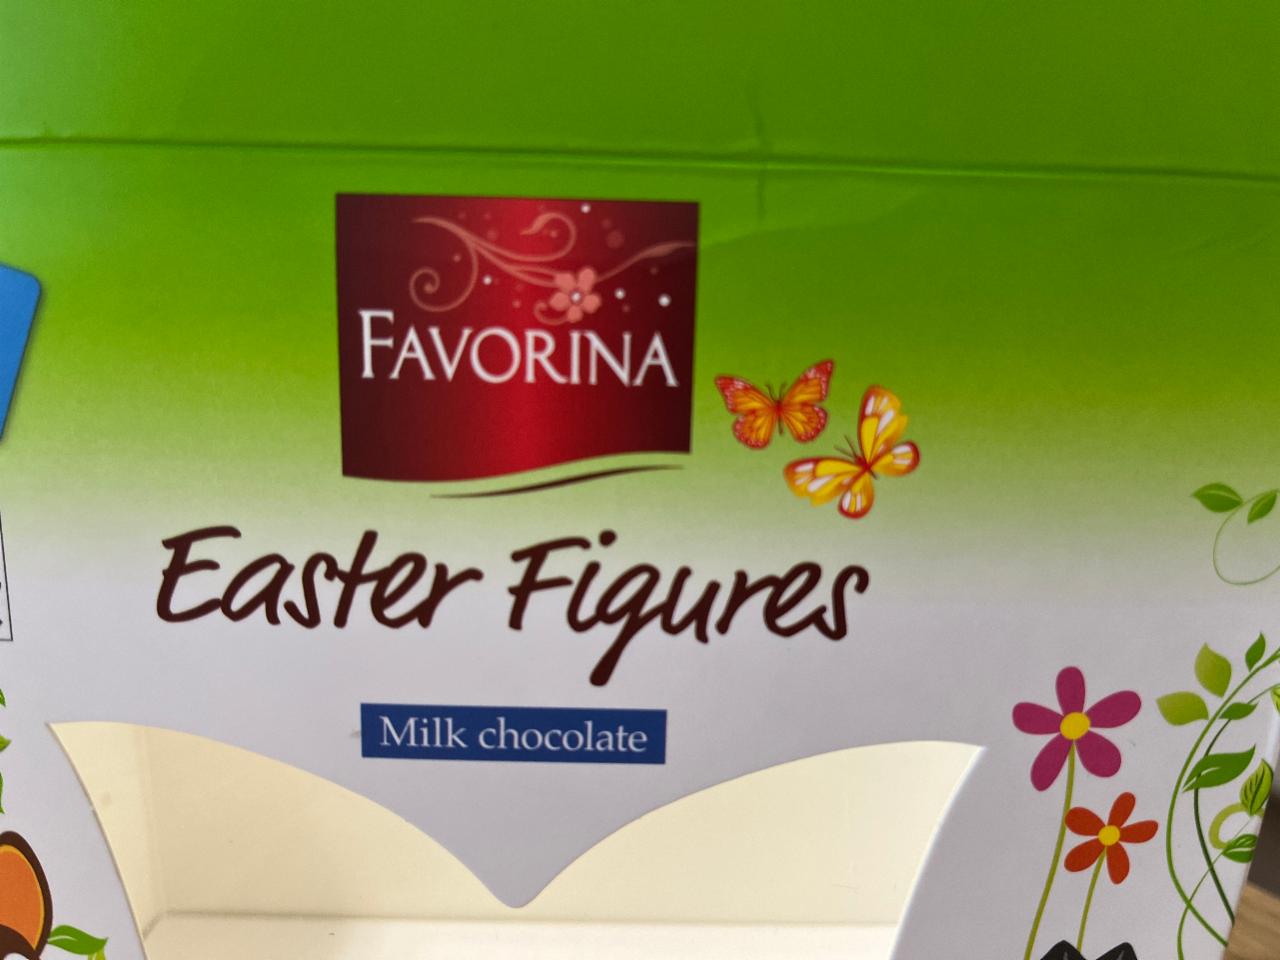 Fotografie - Easter figures Milk Chocolate Favorina